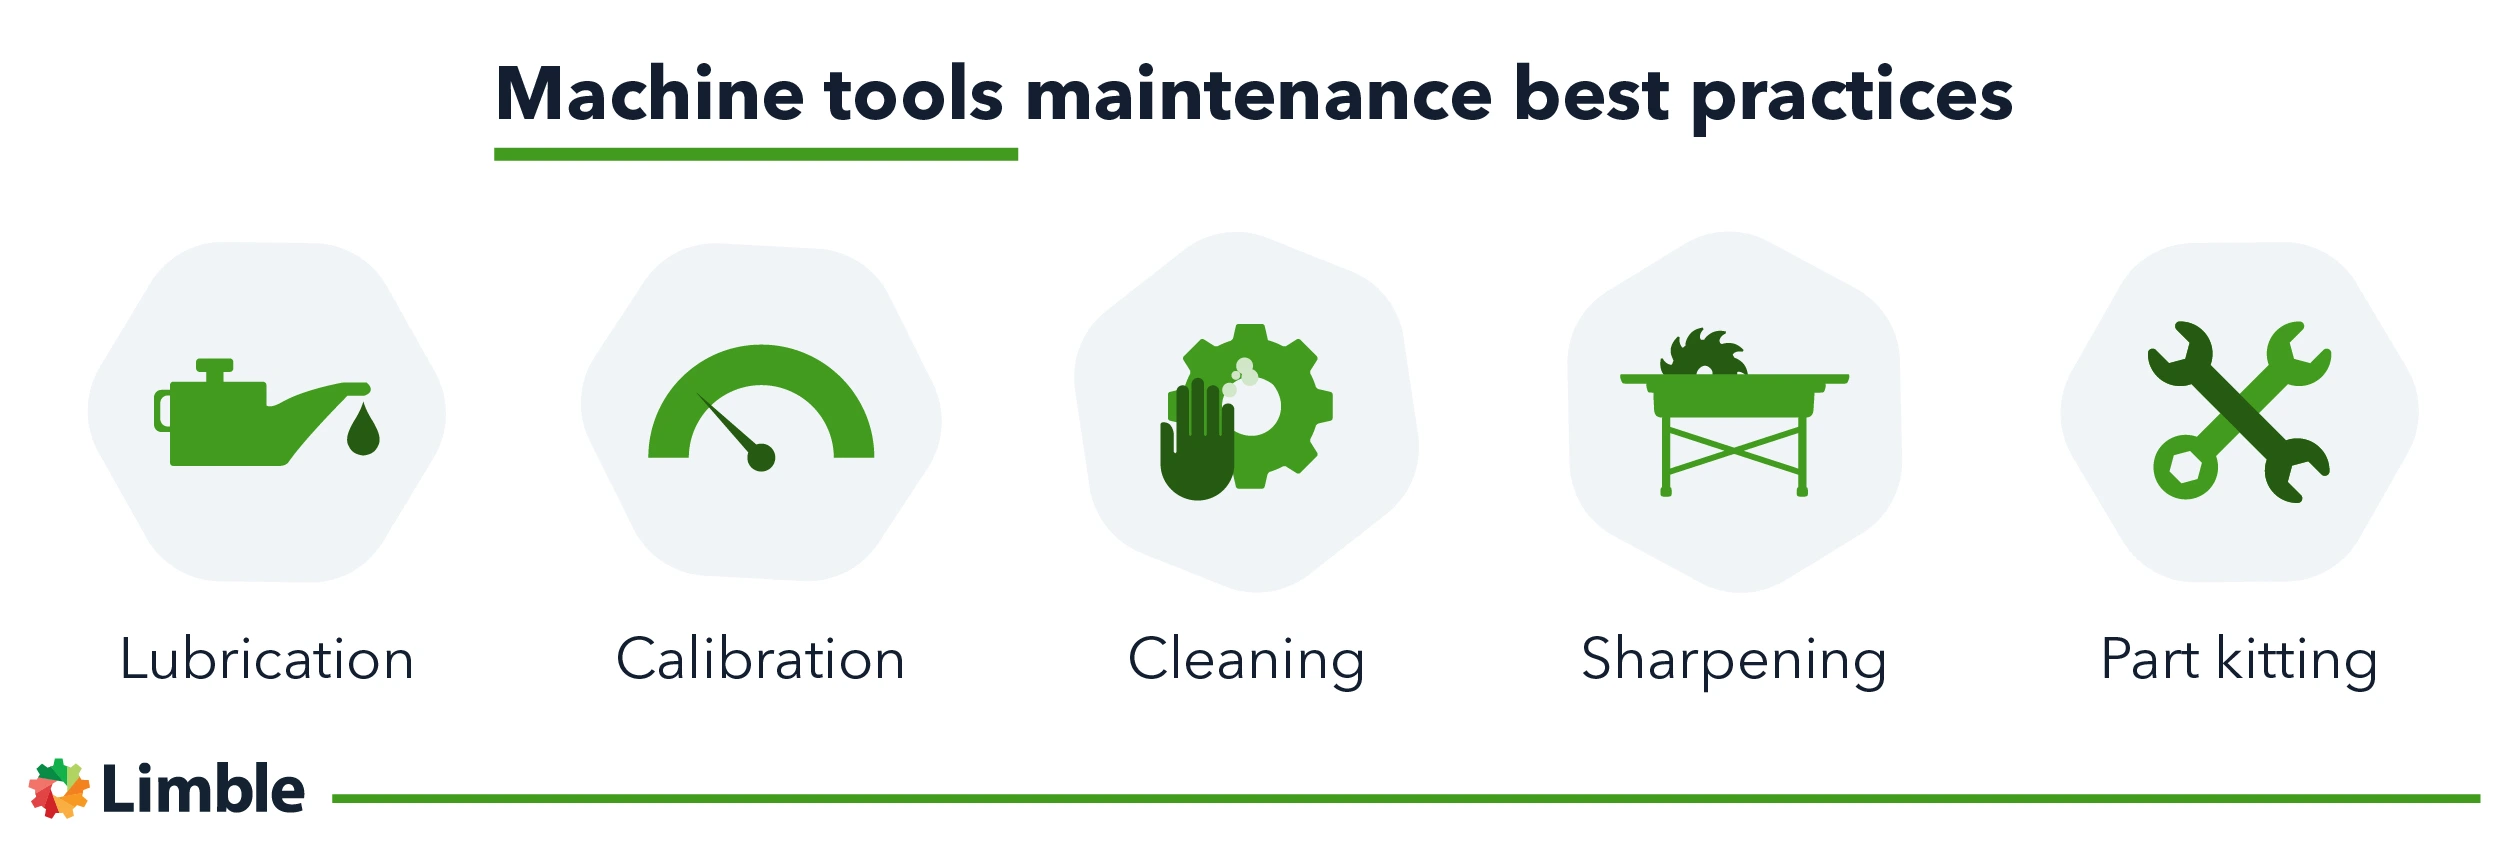 Machine tools maintenance best practices